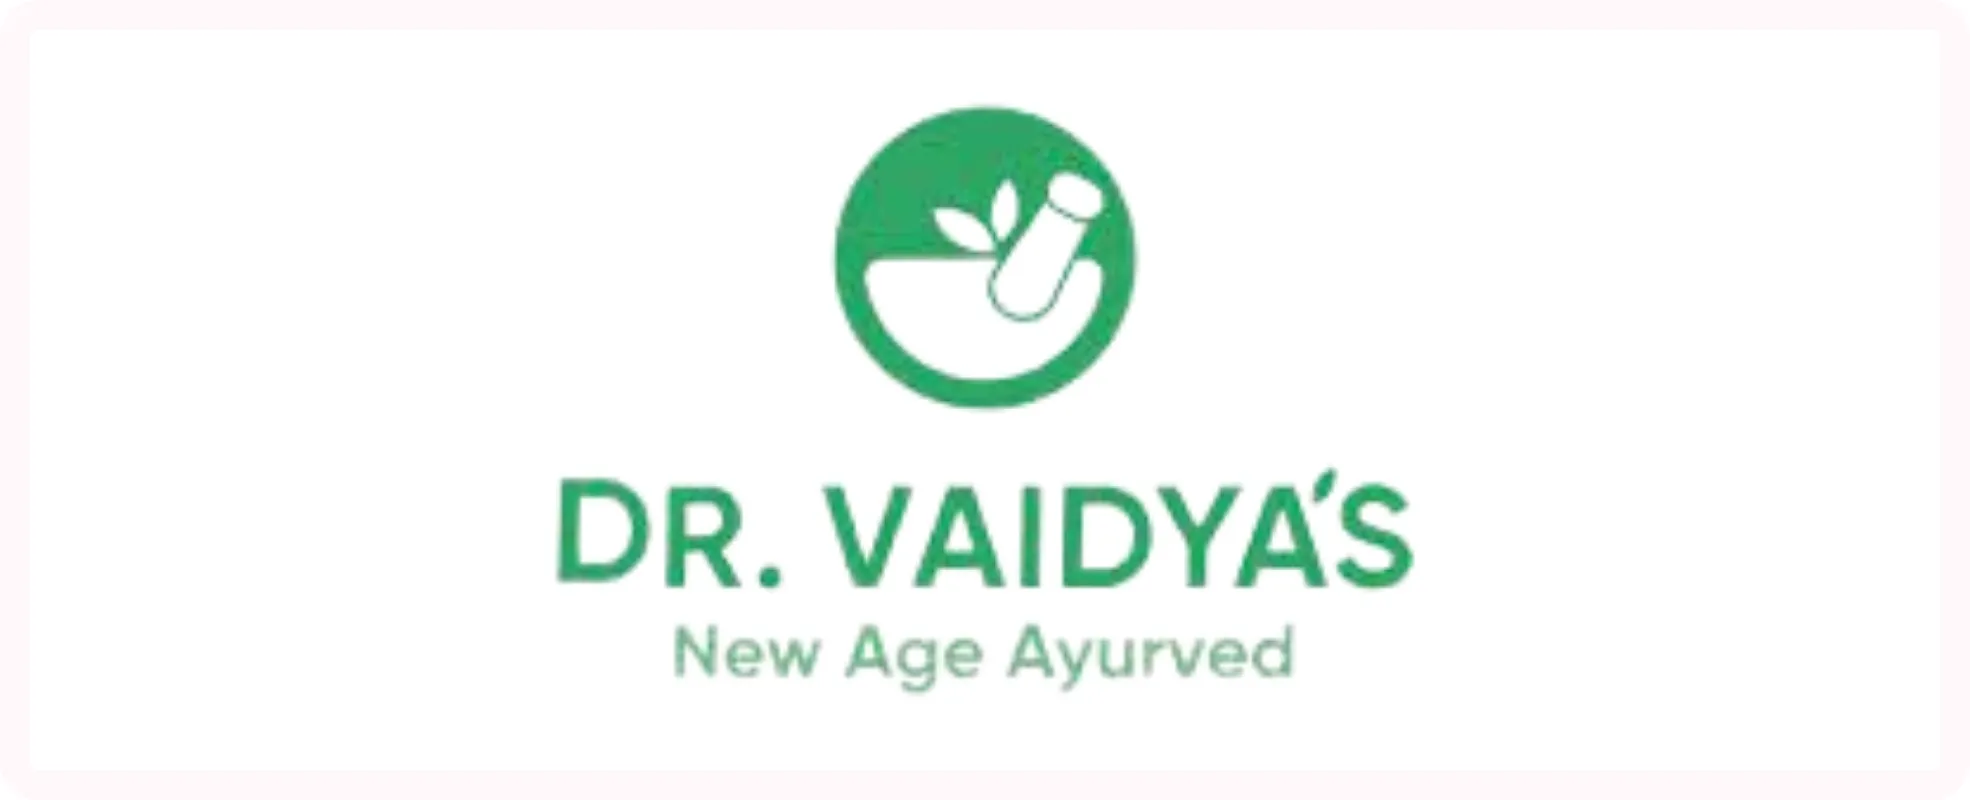 Dr. Vaidya